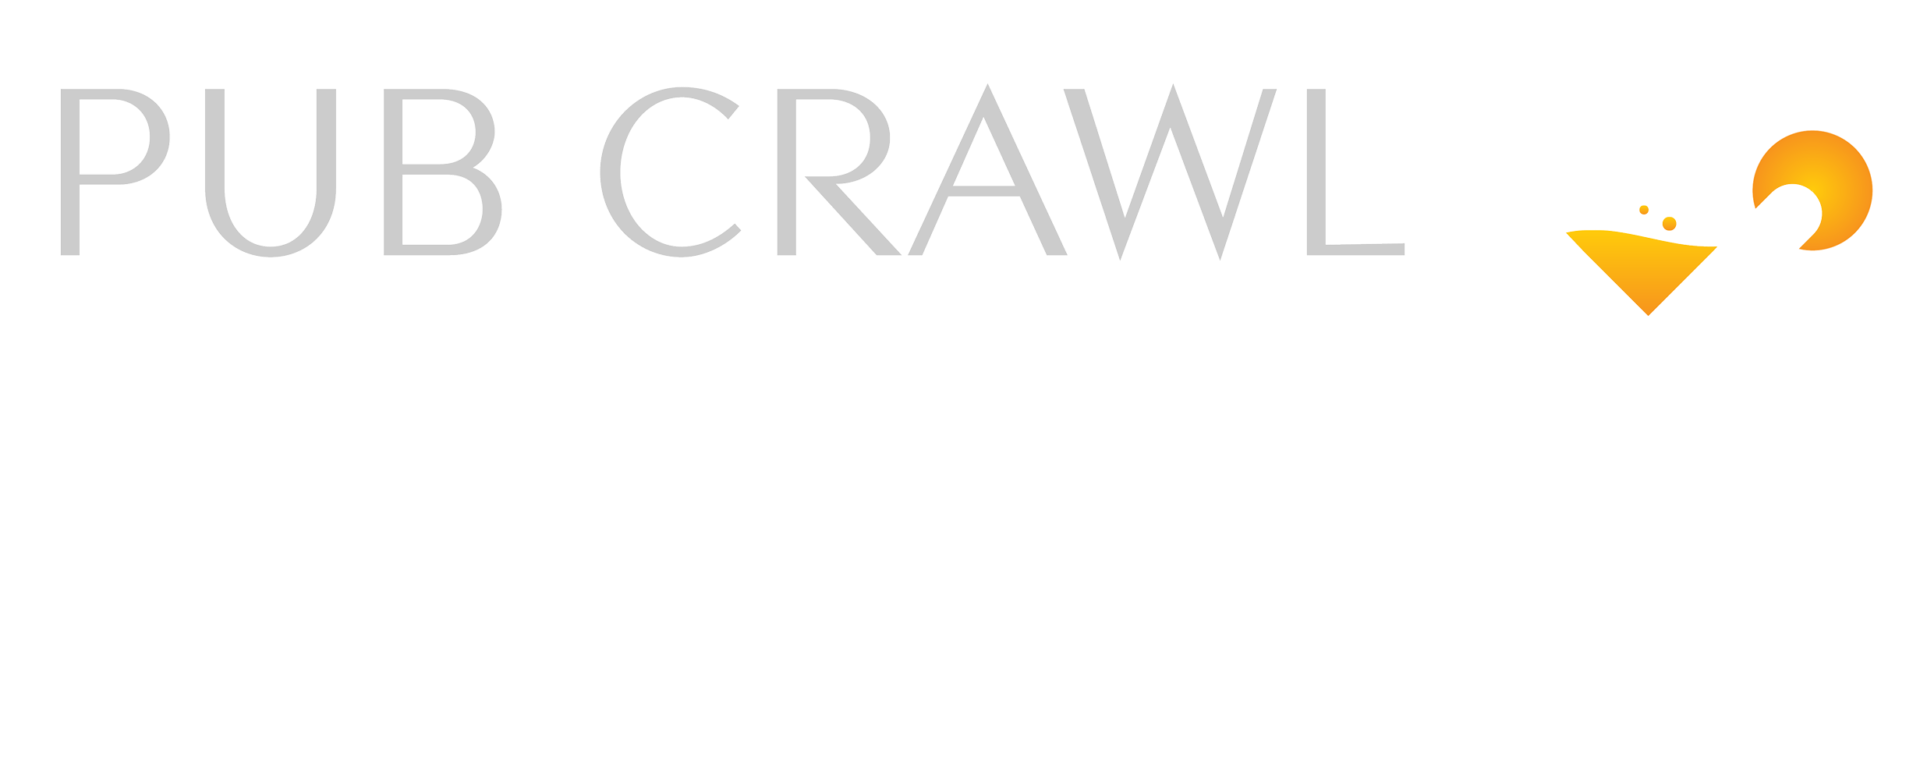 Pub Crawl Dubai